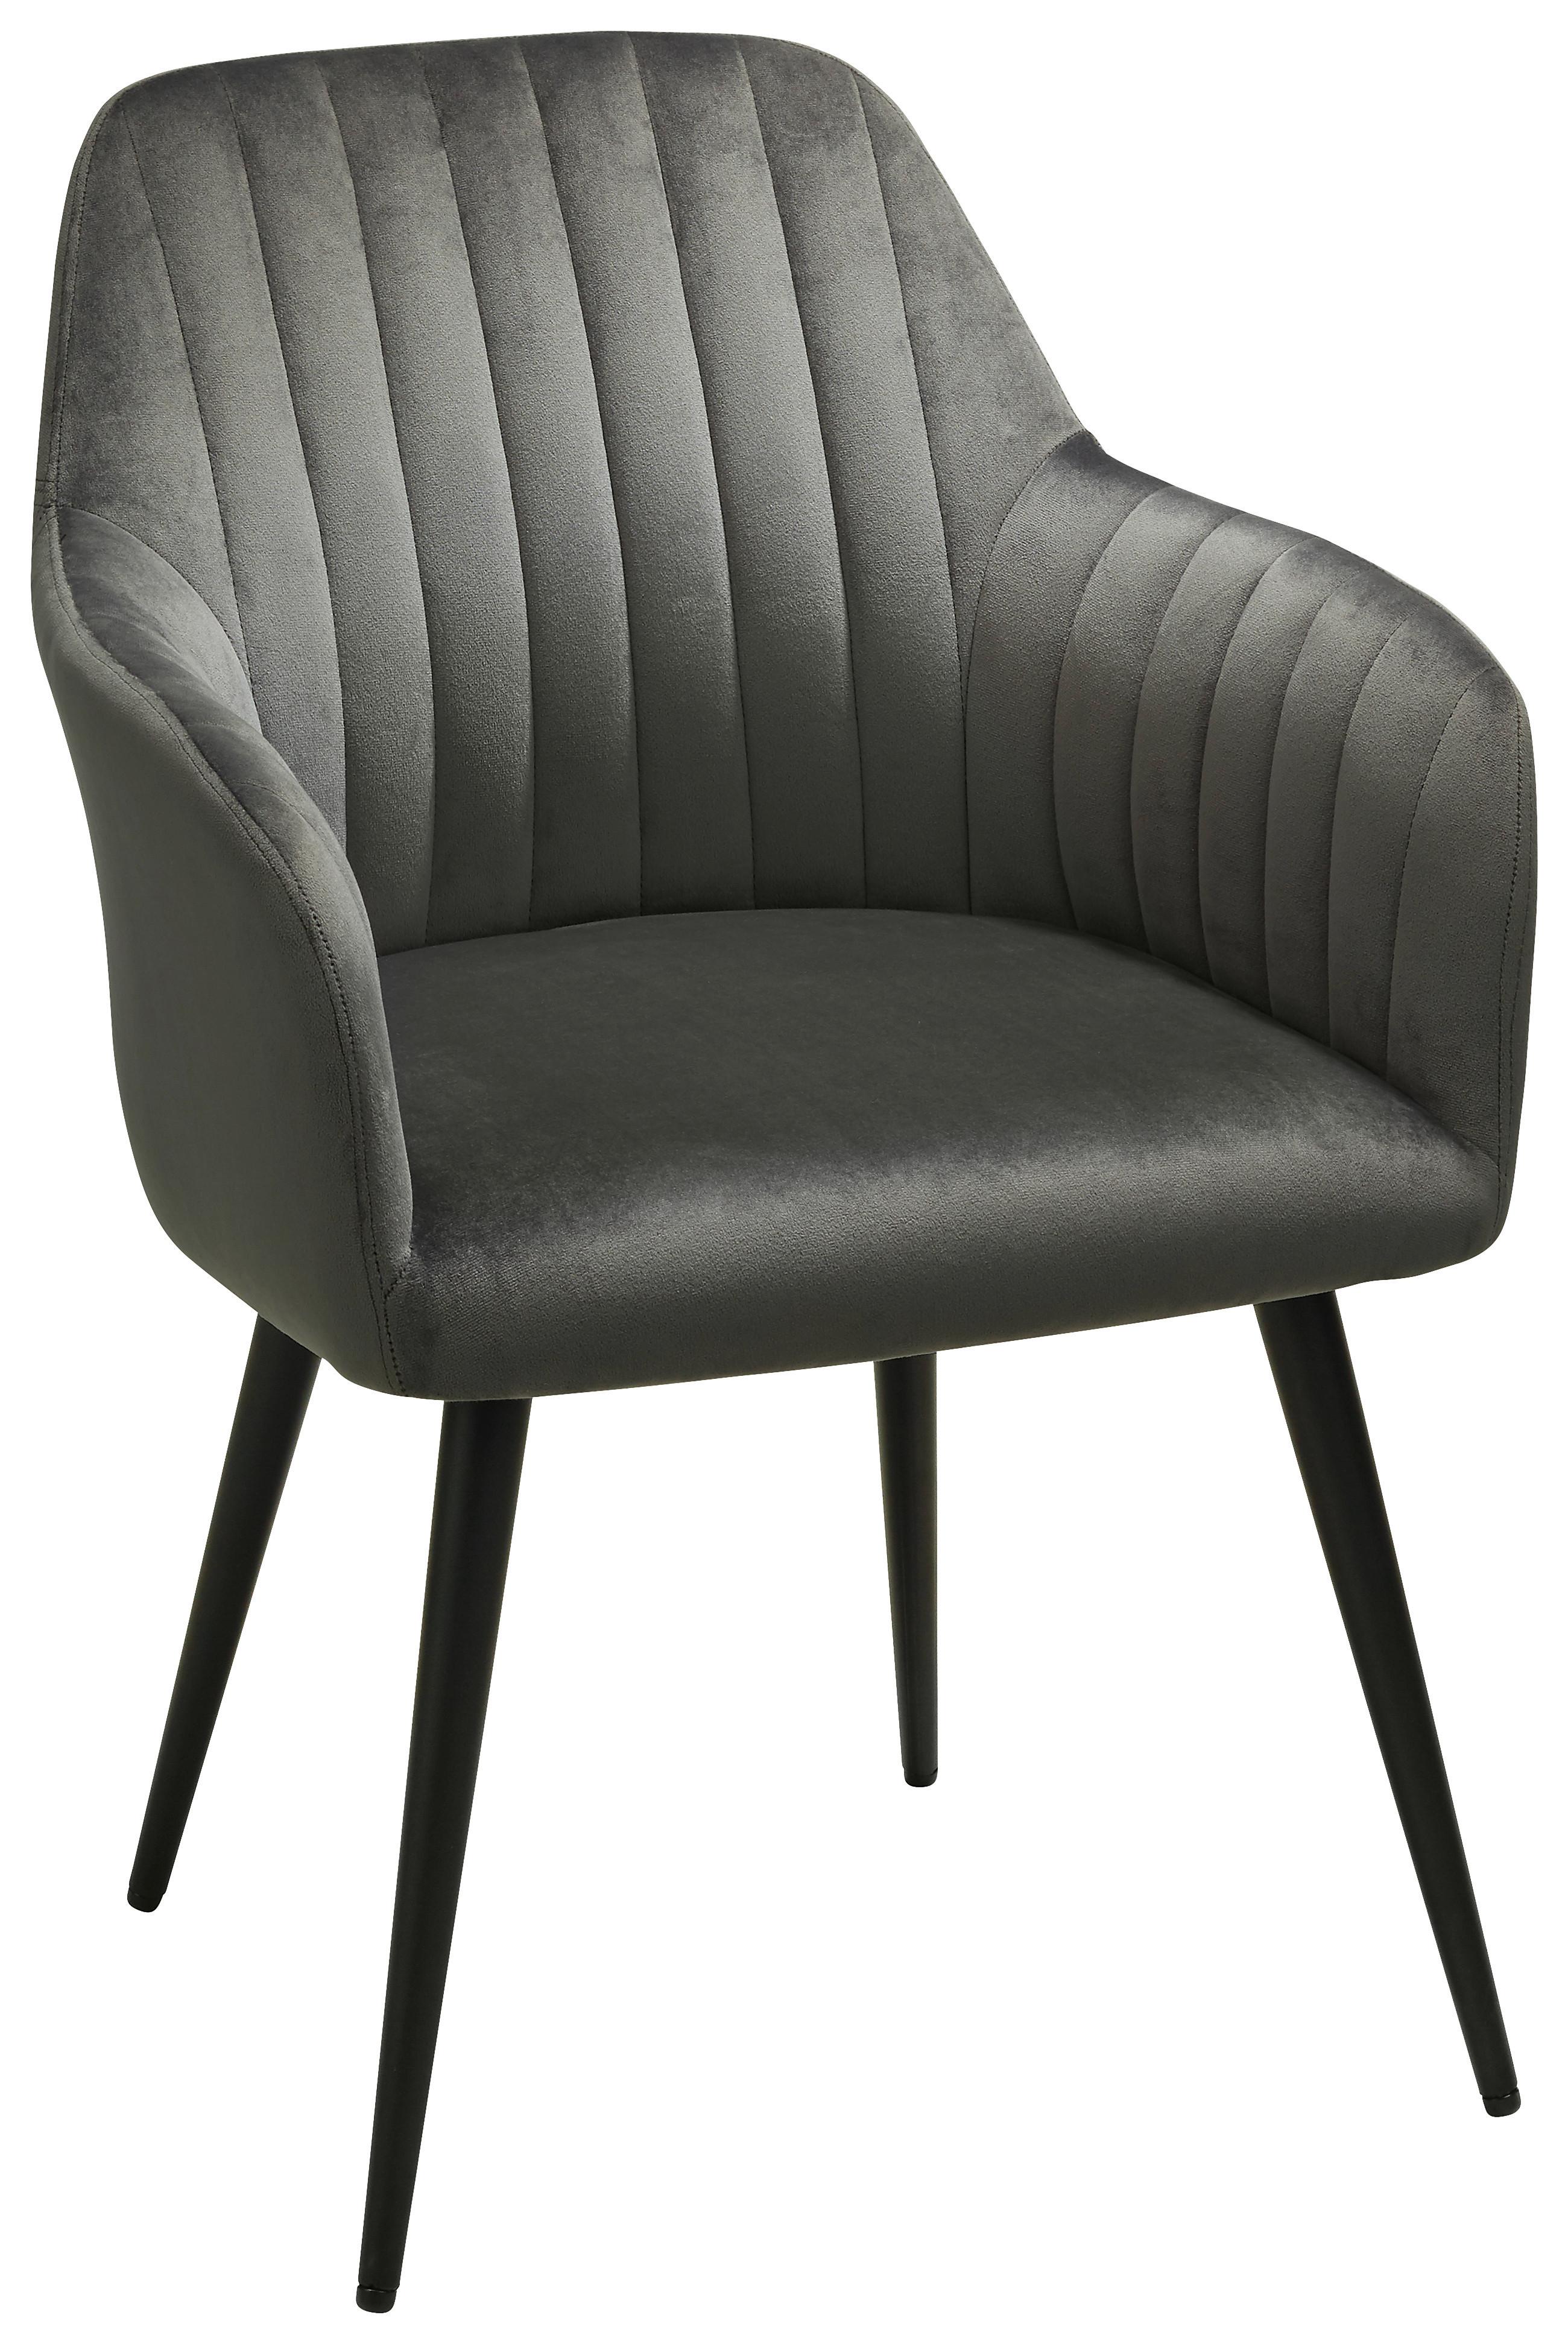 Židle S Područkami Martha -Top- - šedá/černá, Moderní, kov/textil (57/83,5cm) - Modern Living